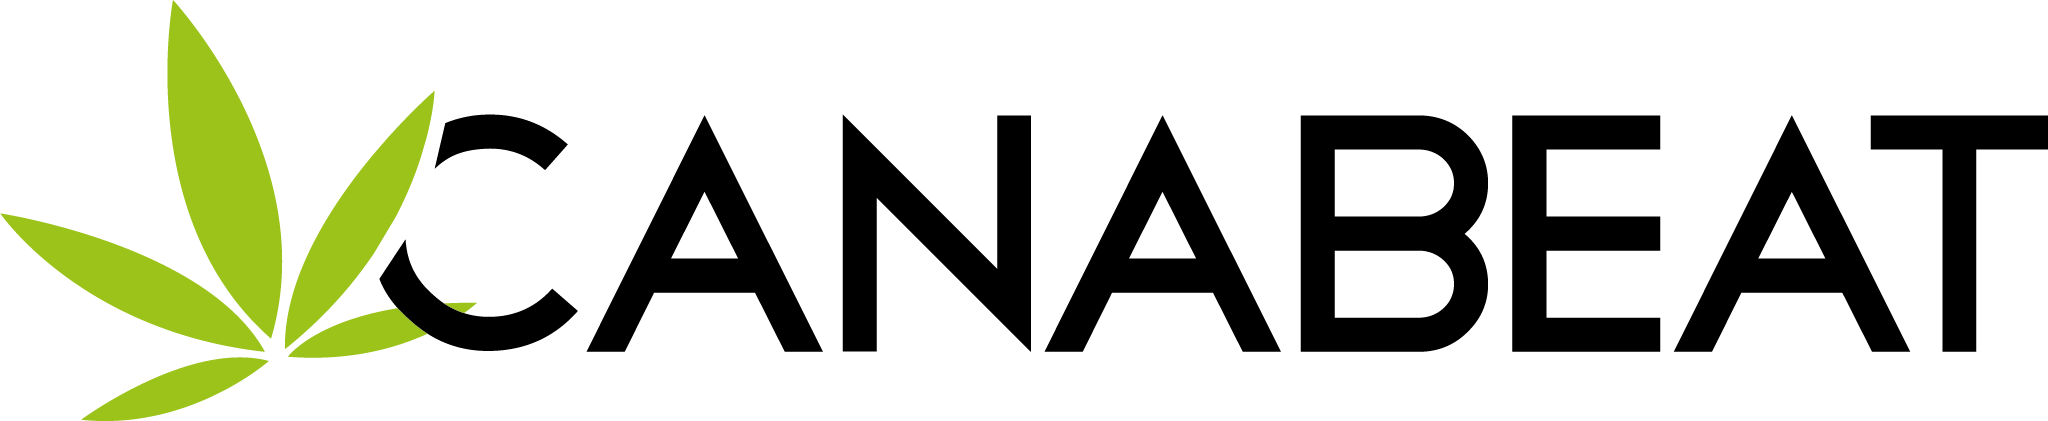 Logo konopne znacky Canabeat